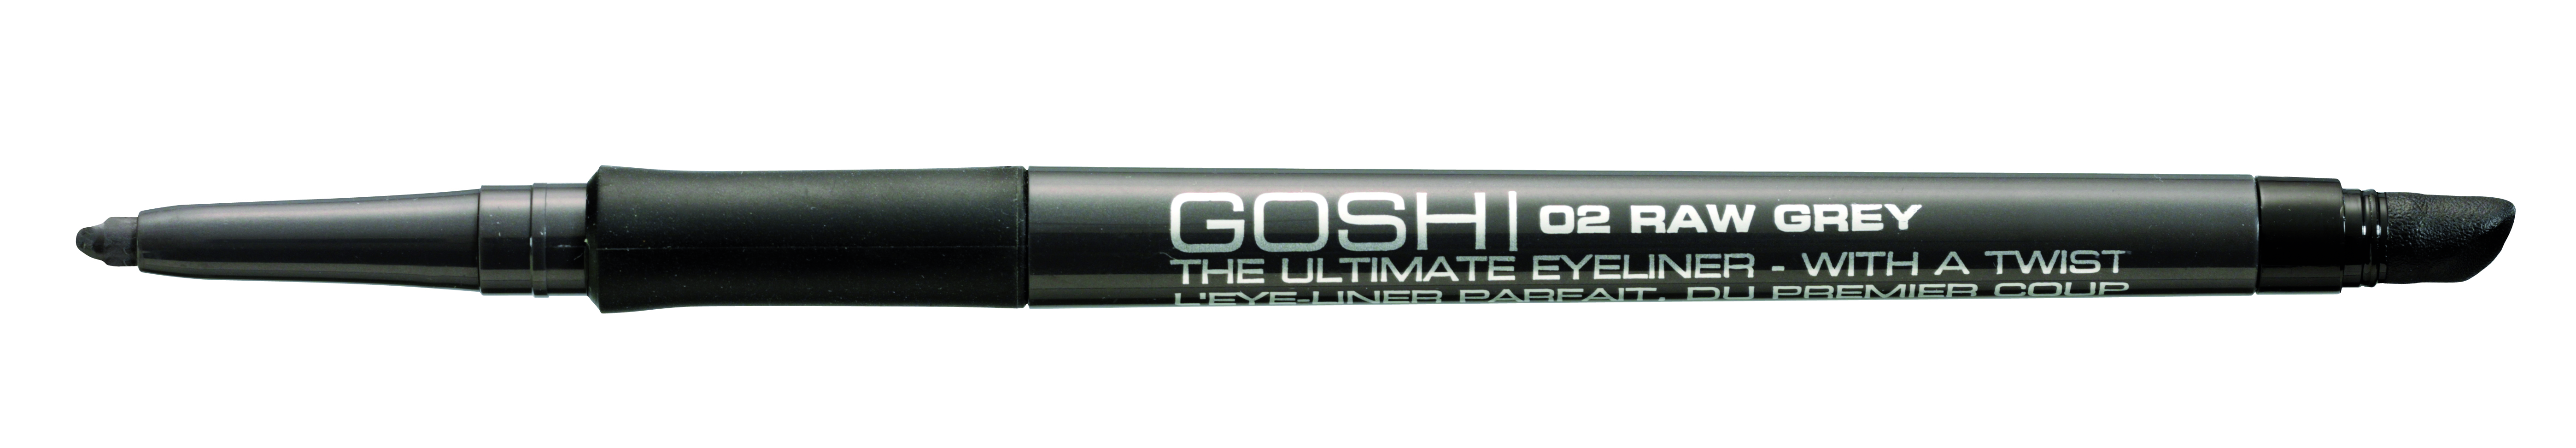 Карандаш для глаз Gosh The Ultimate Eyeliner-With a Twist 02 - Raw Grey, GOSH COPENHAGEN  - Купить